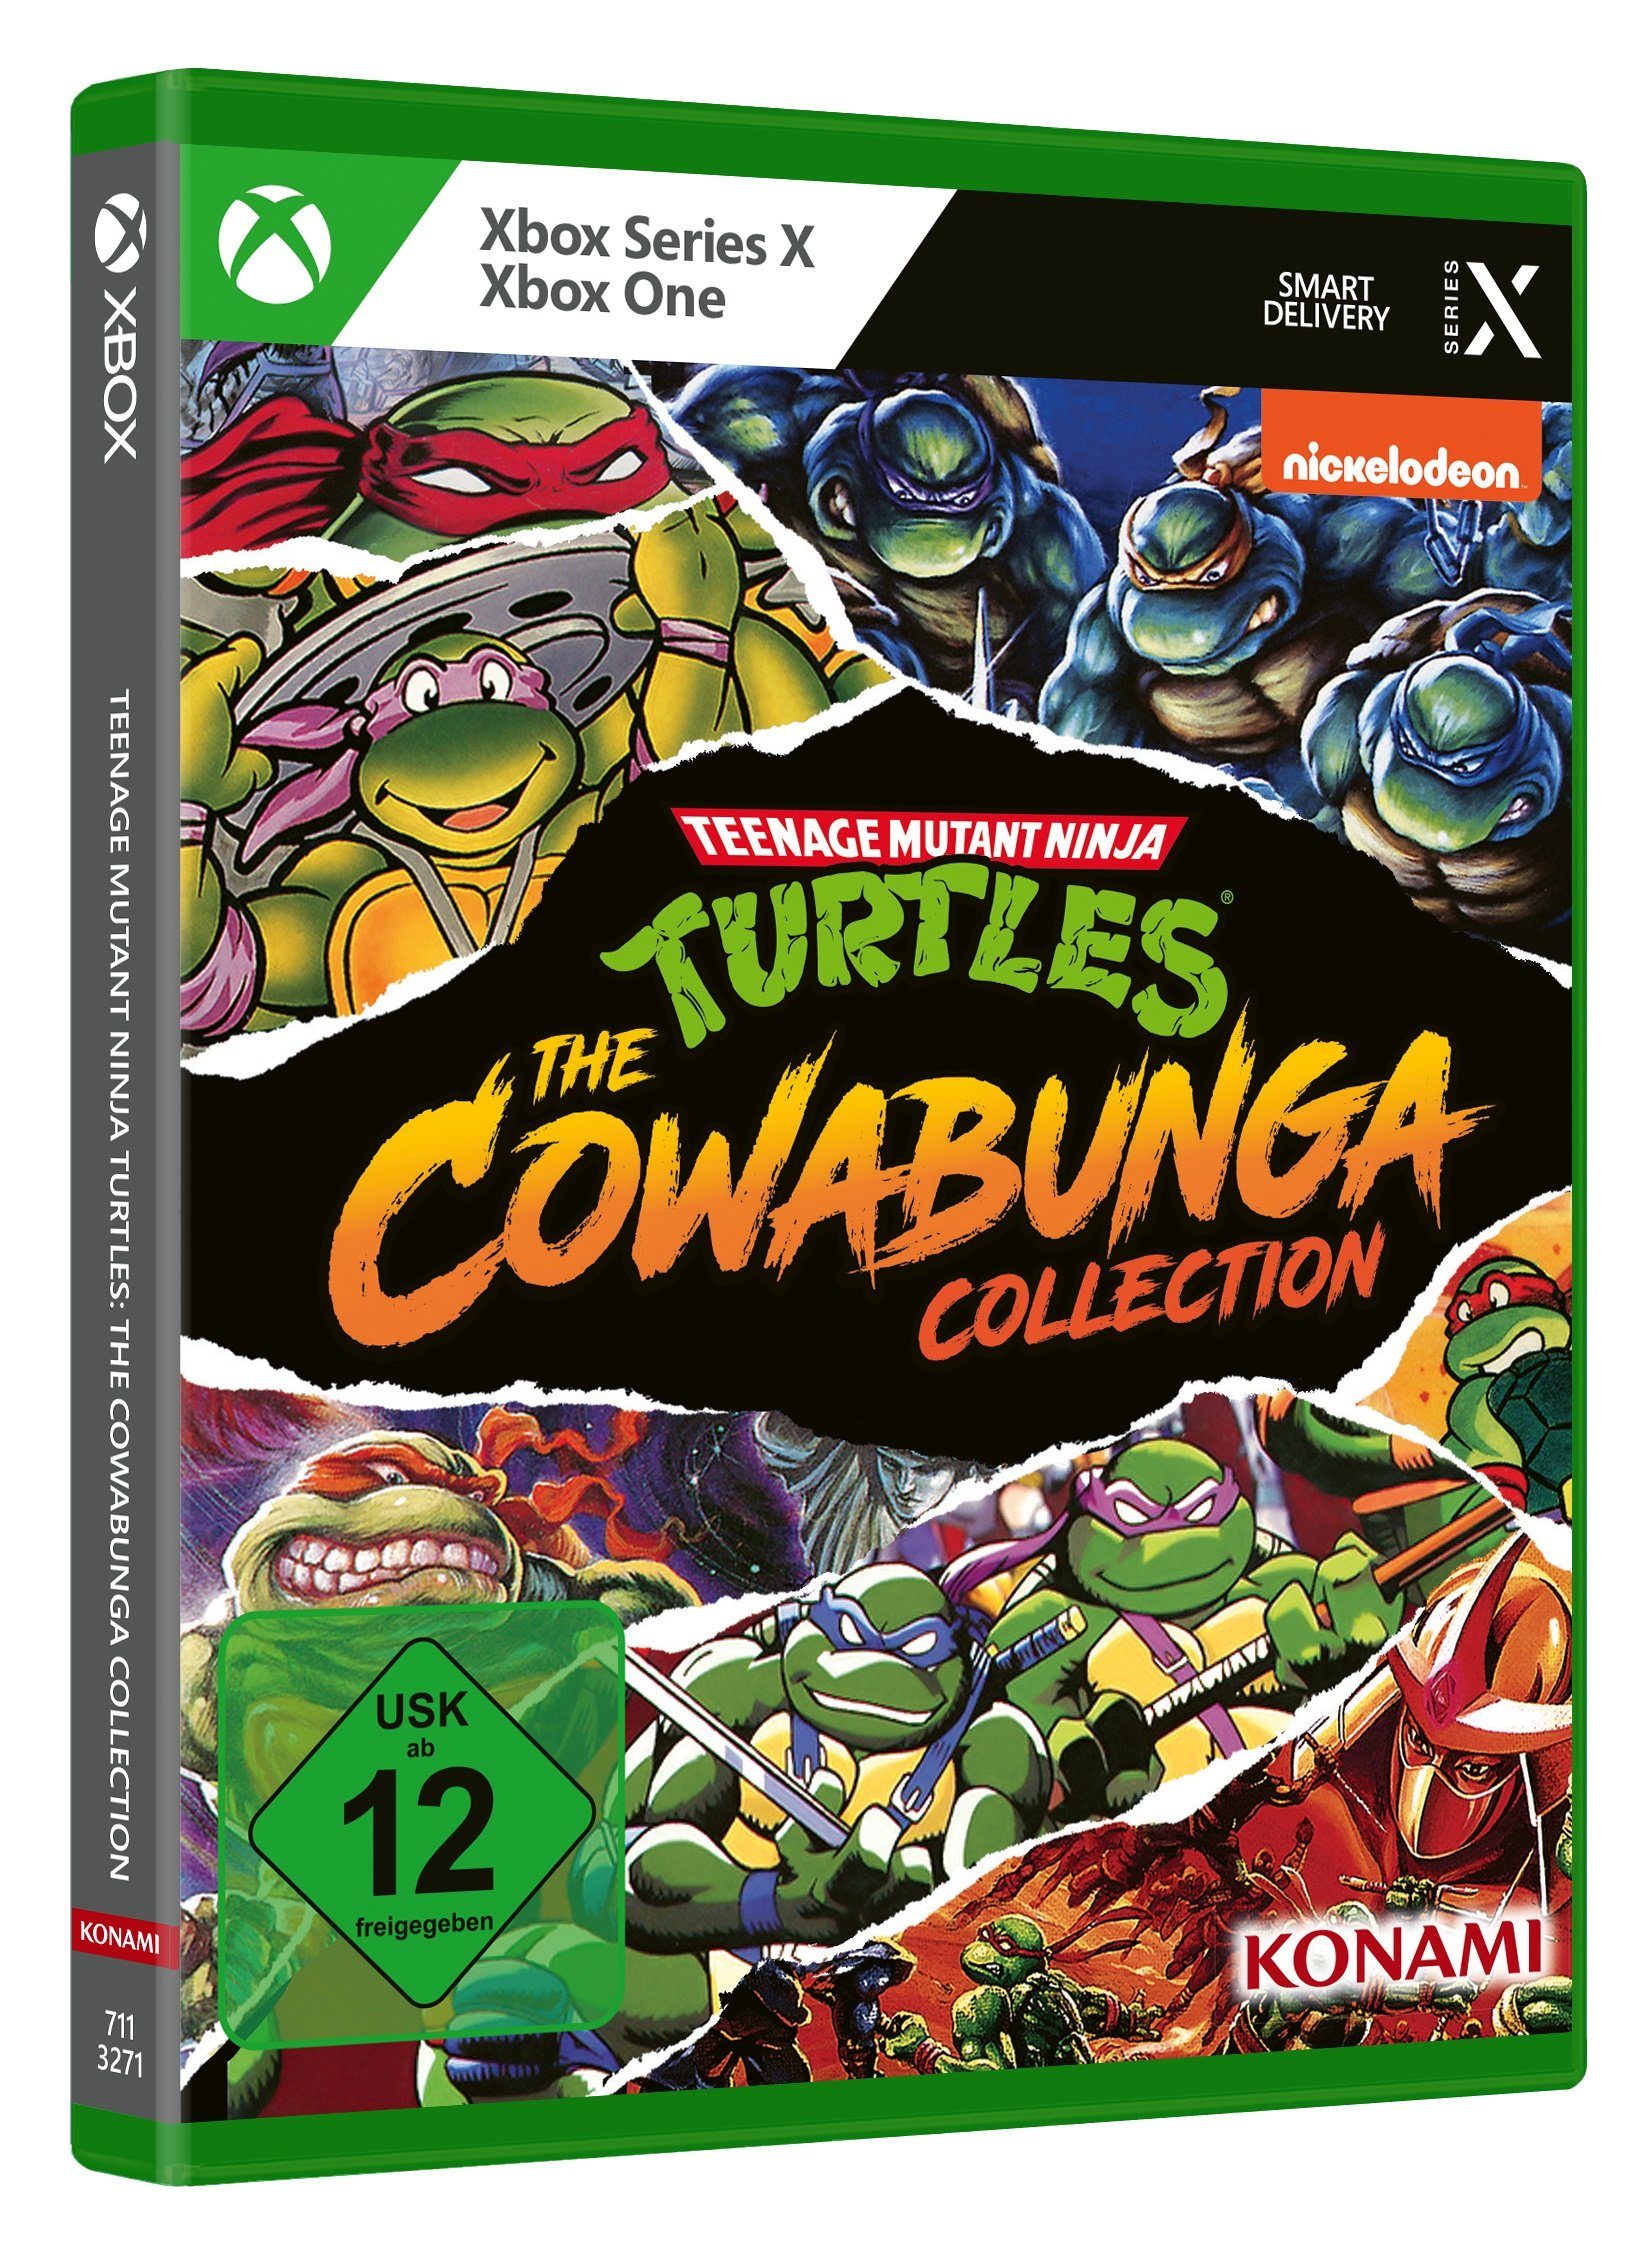 Konami Teenage Mutant Ninja Turtles Series The Xbox Xbox Cowabunga Collection X - One